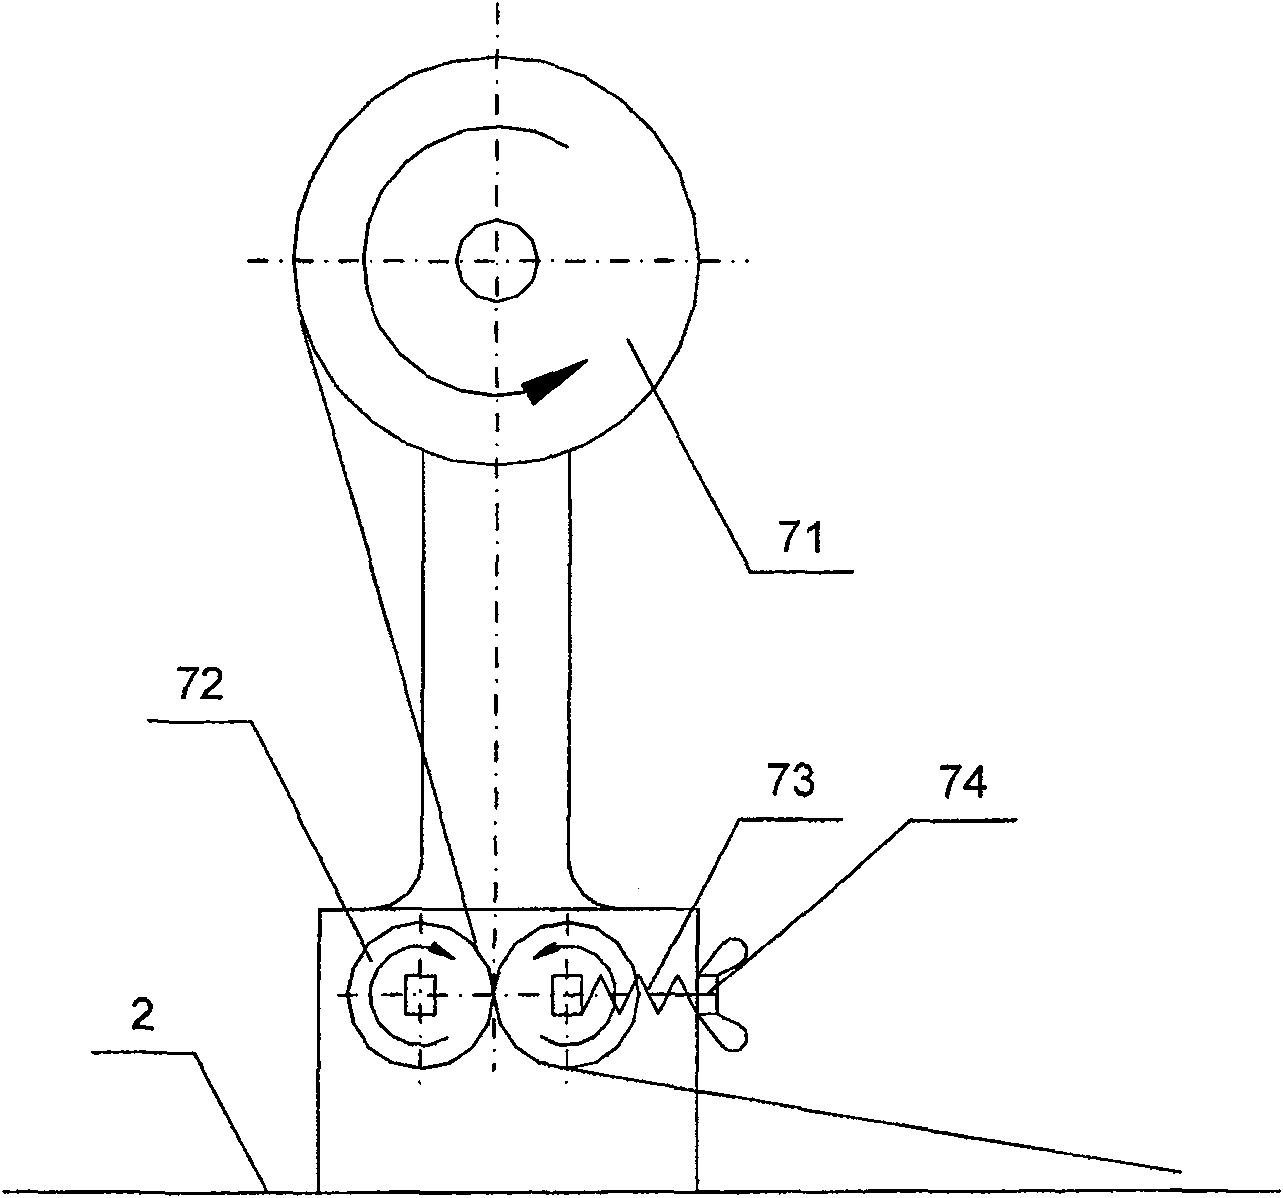 Nano-plate plane glue distributing device and method